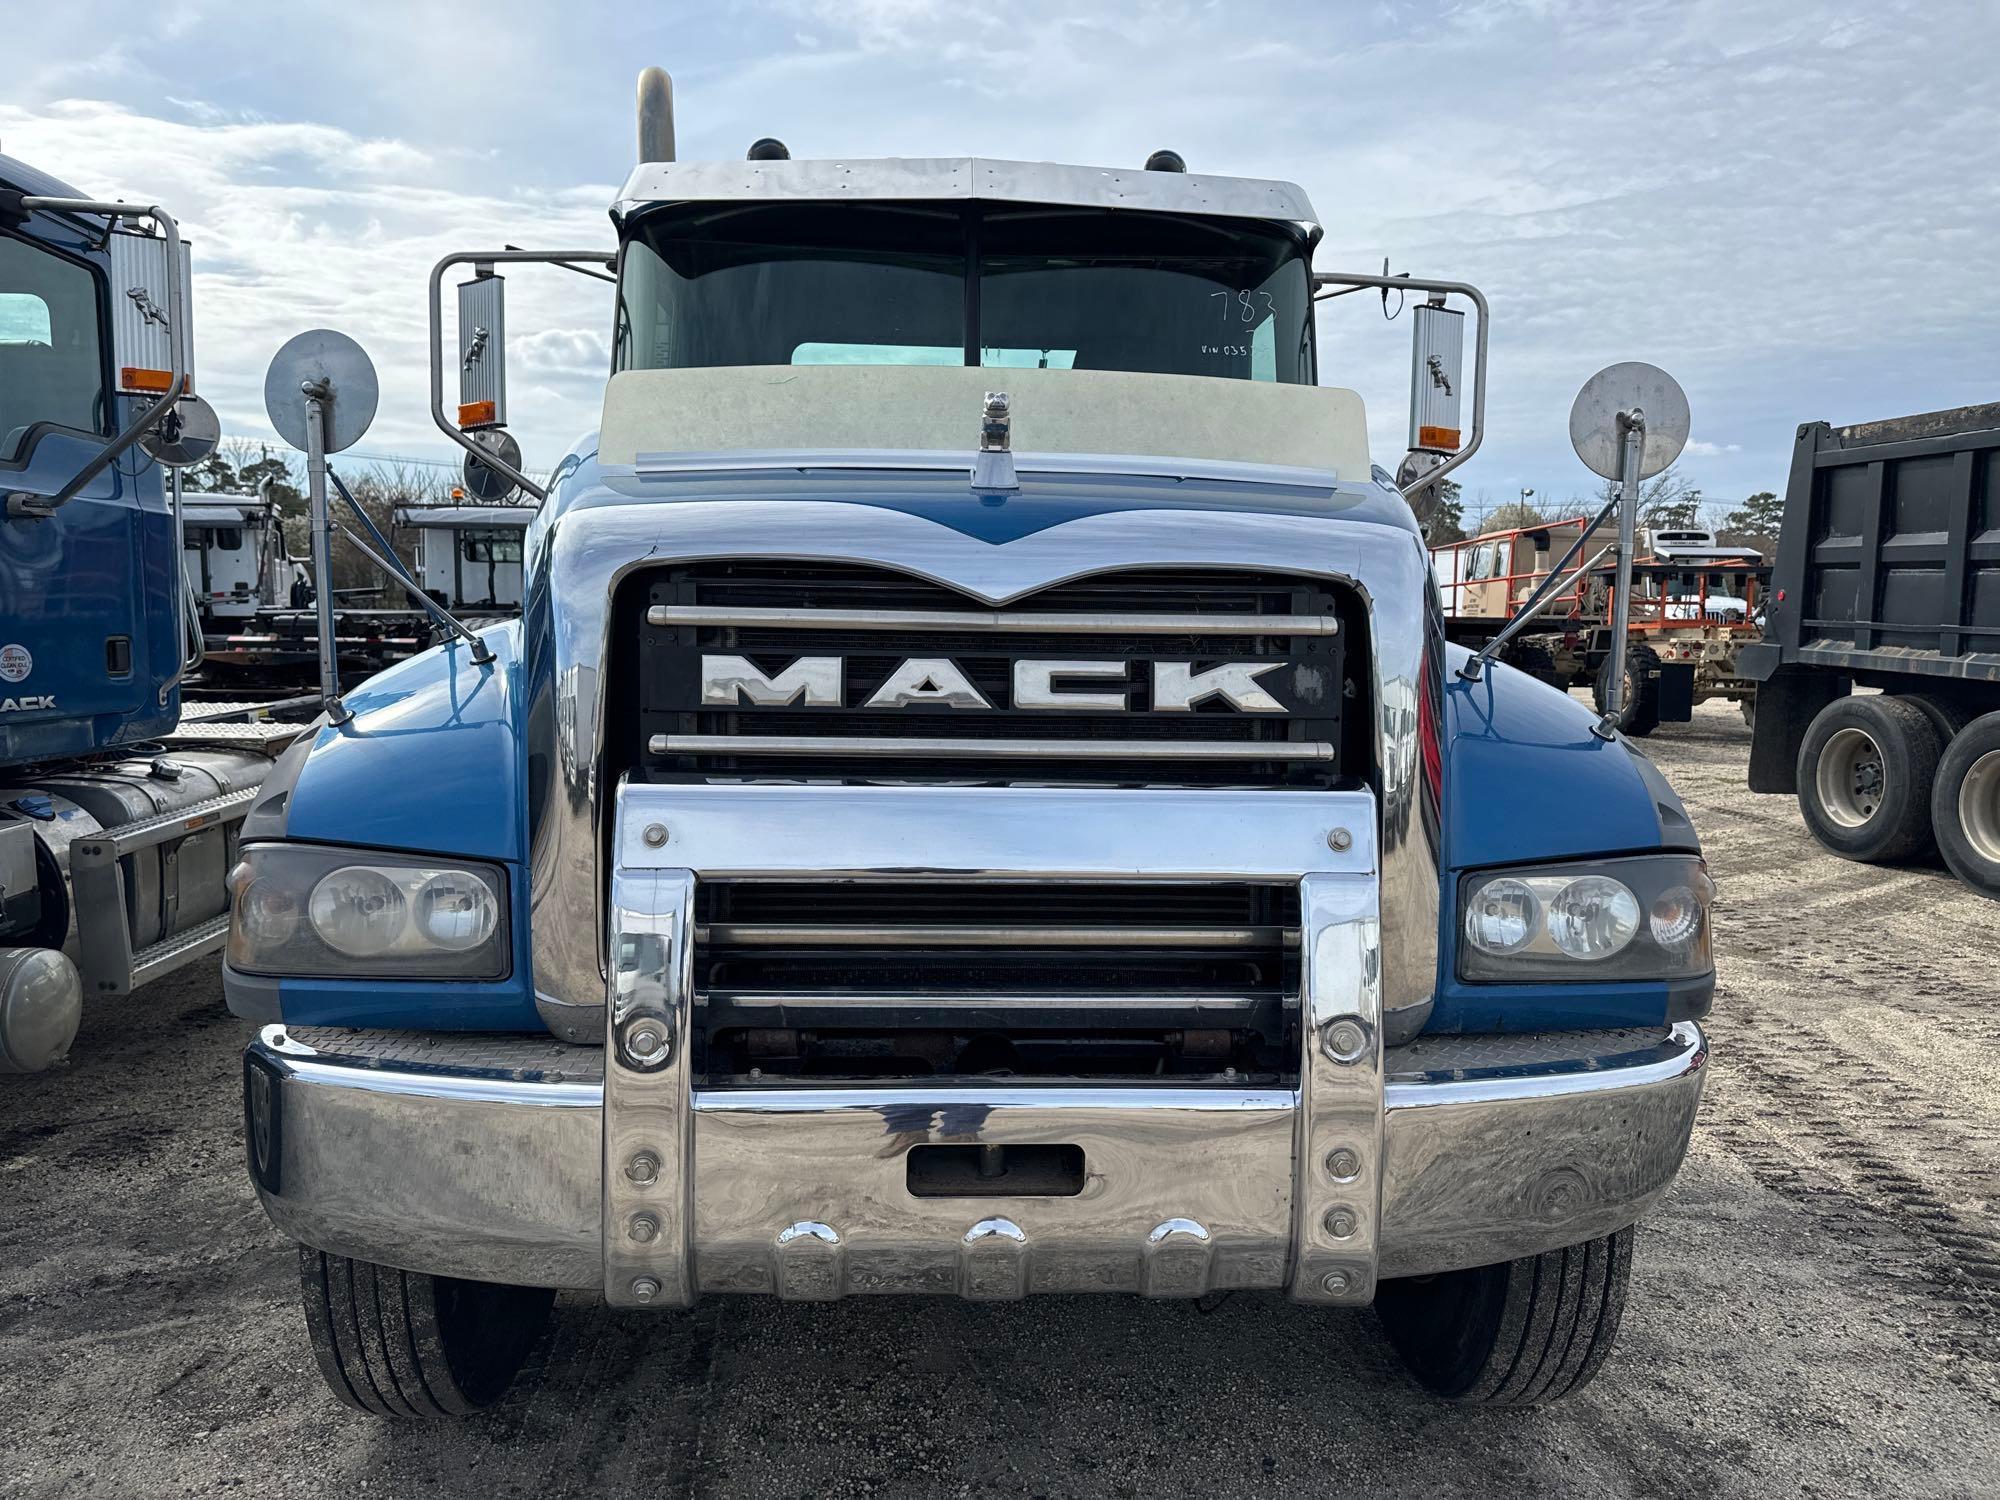 2017 MACK GU713 TRUCK TRACTOR VN:1M1AX07Y1HM035338 powered by Mack MP8 diesel engine, 500hp,